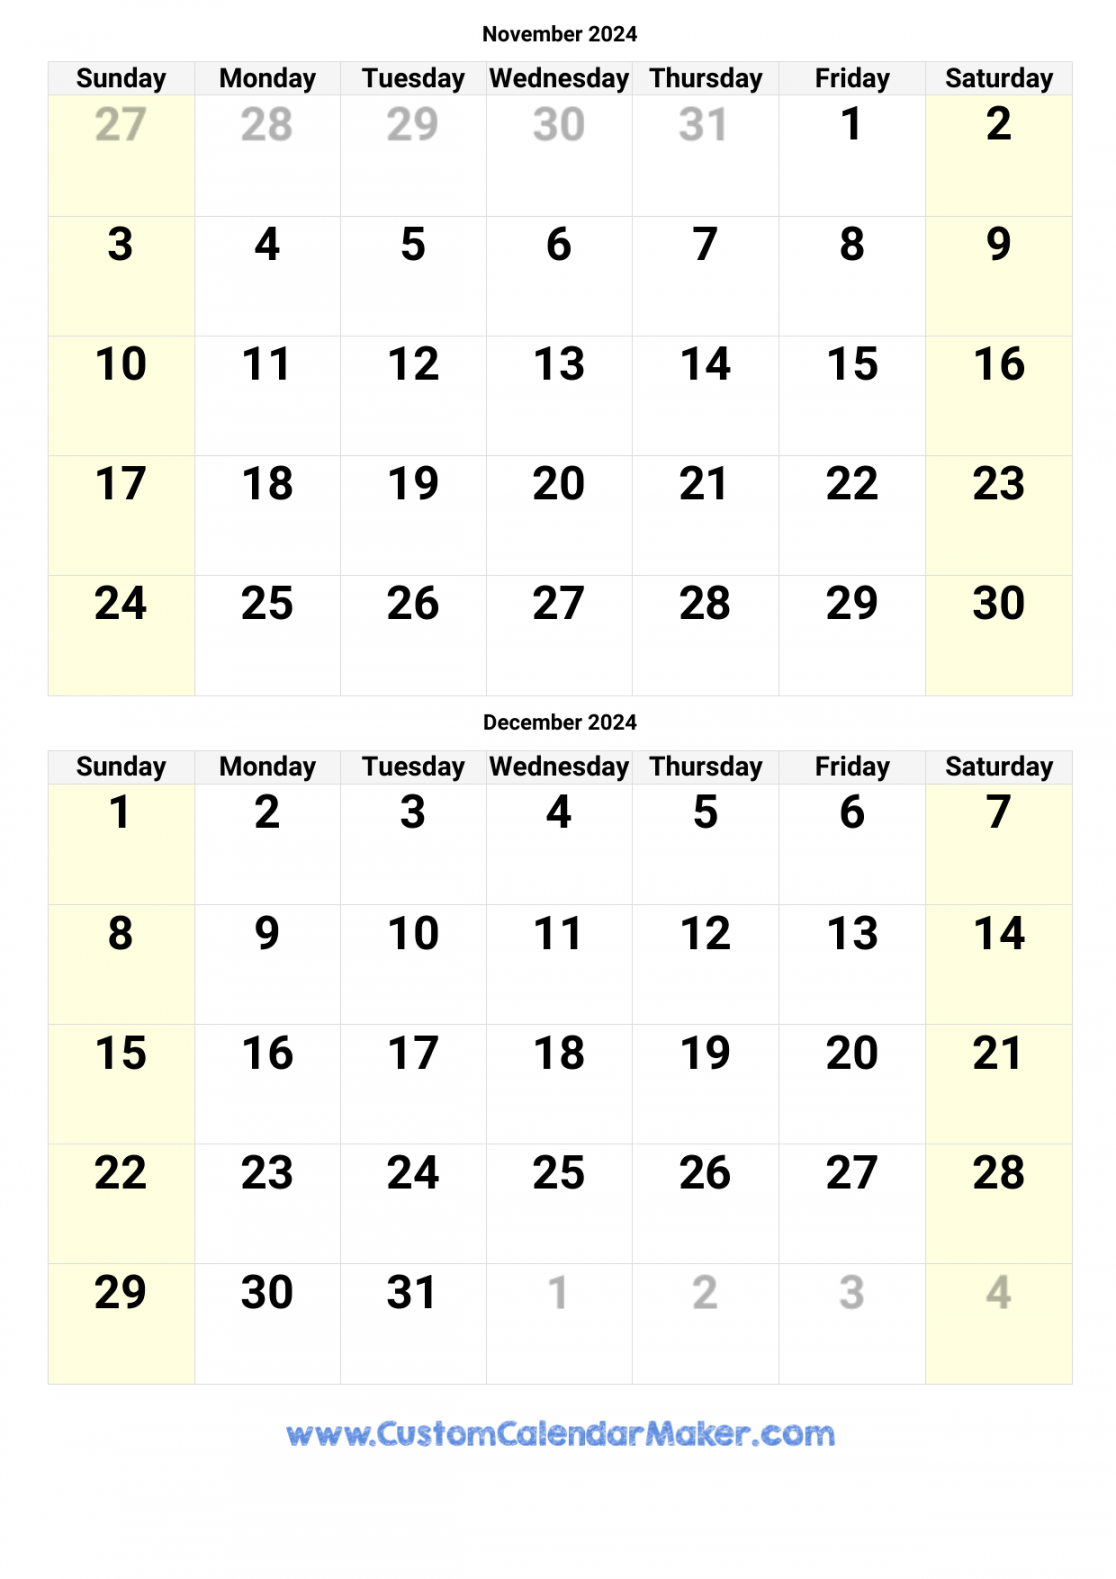 www customcalendarmaker com calendars months nove